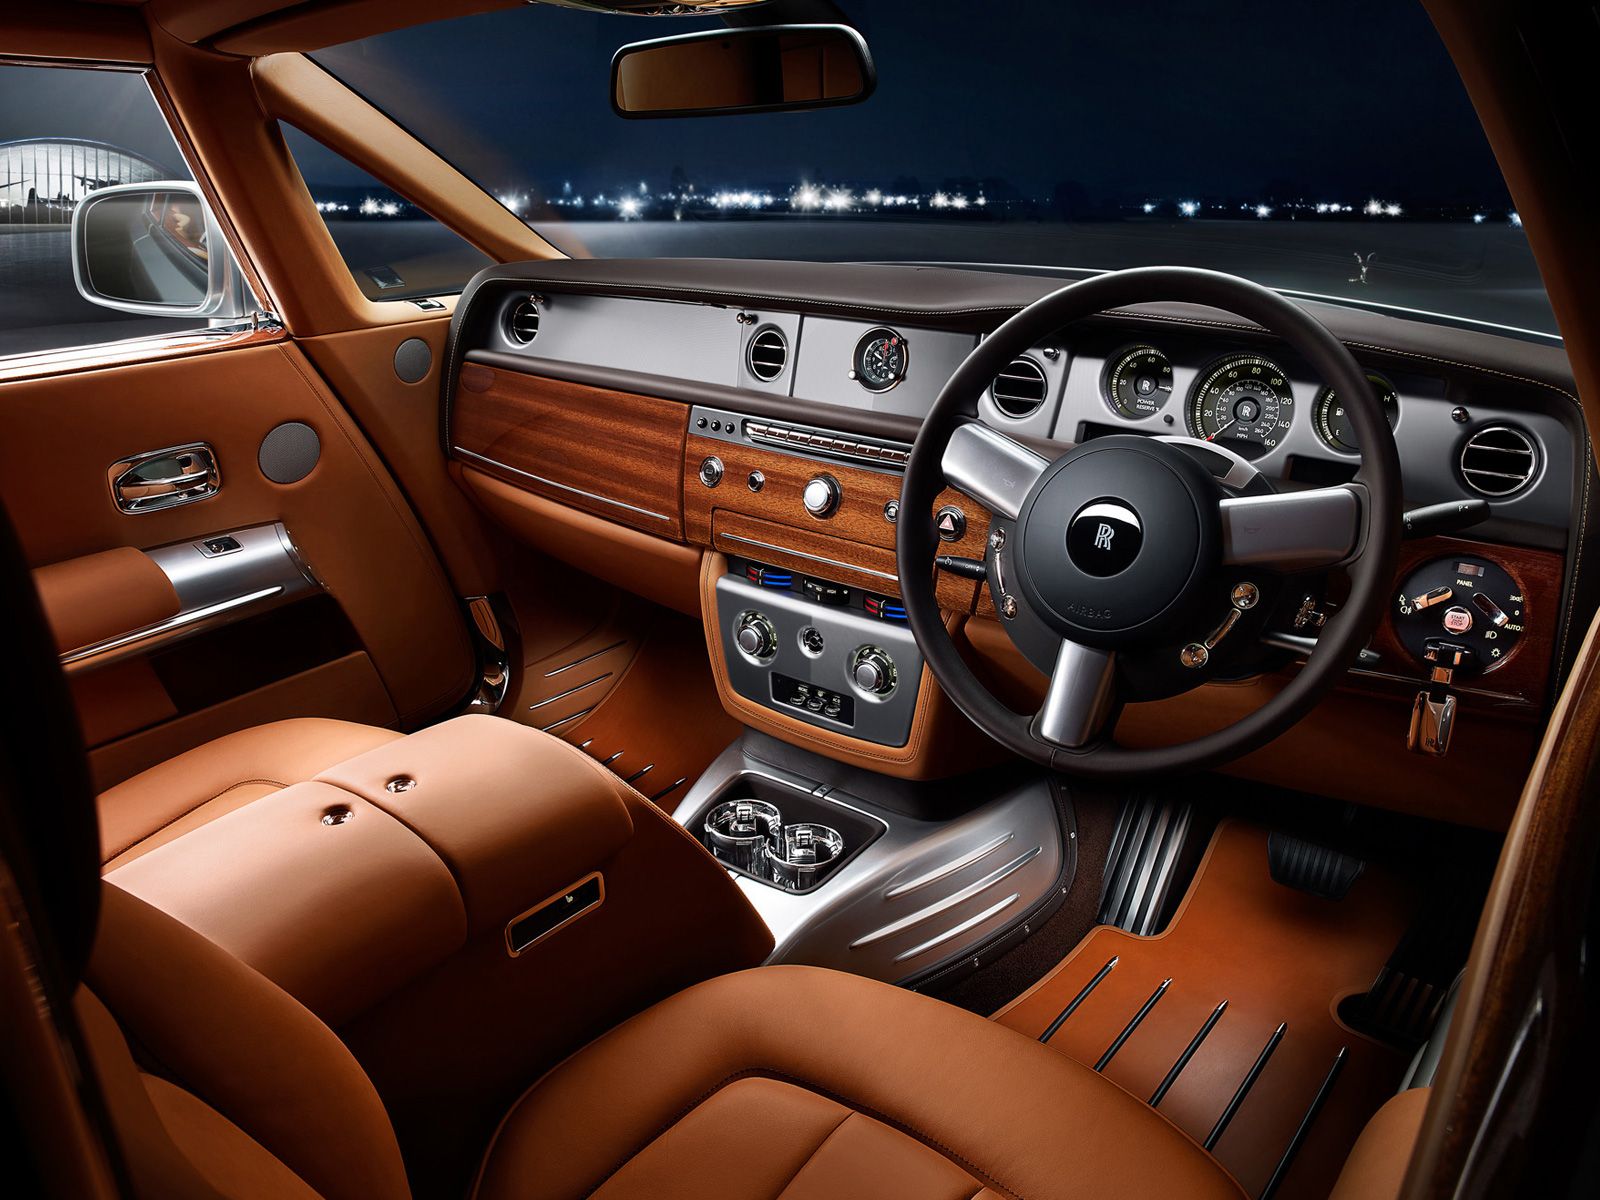 SPORTS CARS: Rolls Royce phantom 2013 interior